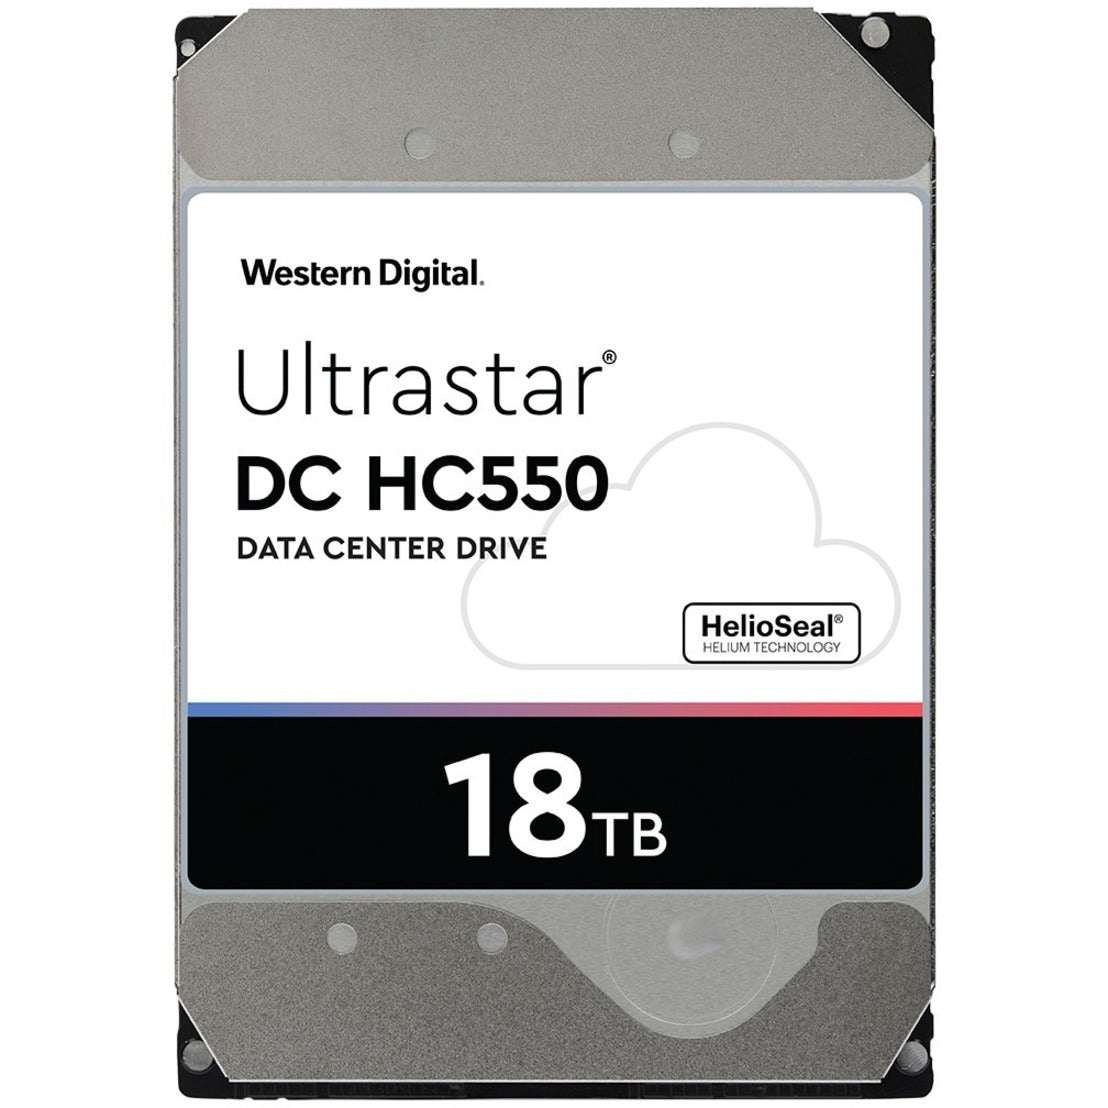 Western Digital 0F38353 Ultrastar DC HC550 Hard Drive, 18TB SAS 7200, 512MB Buffer